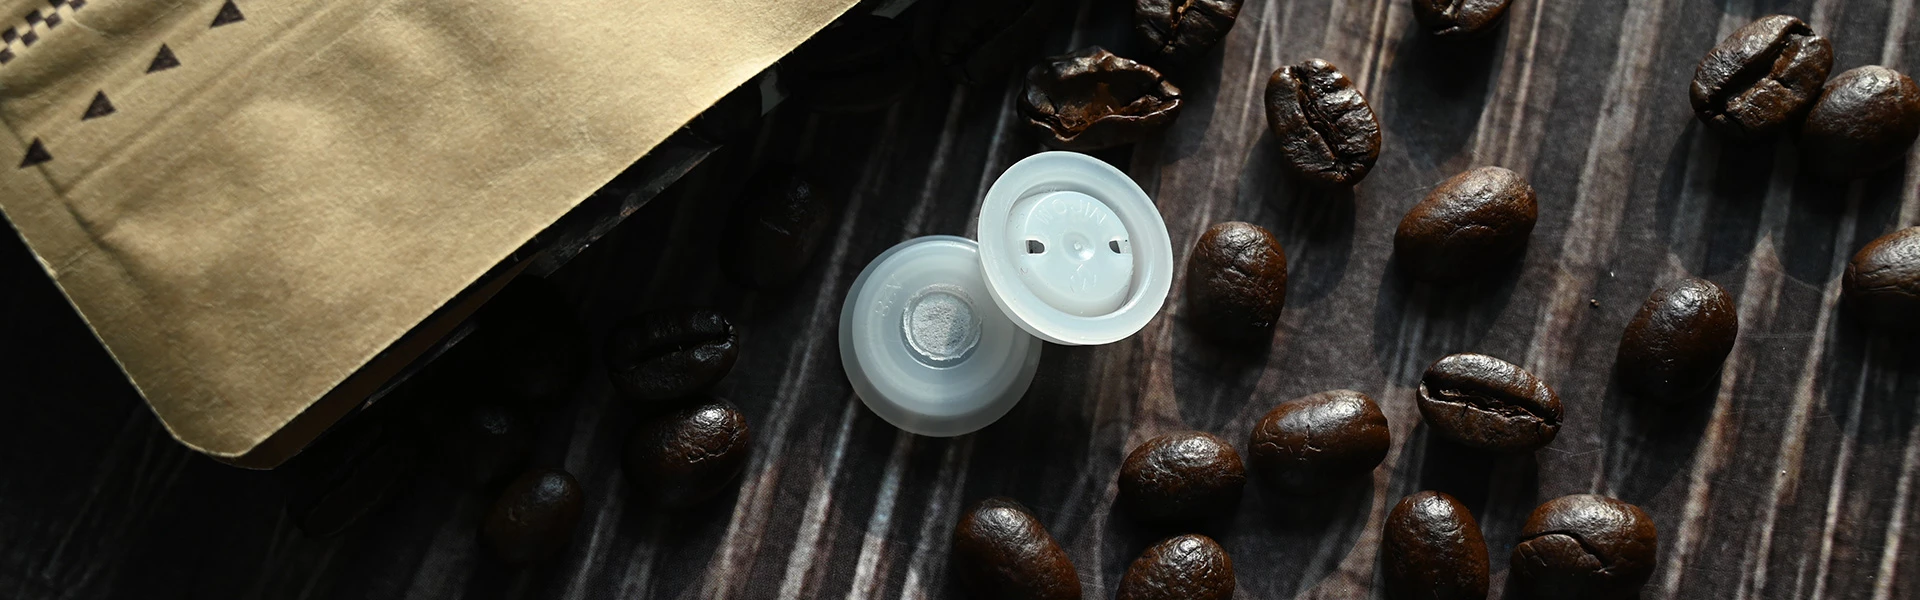 one way valve said coffee refreshes